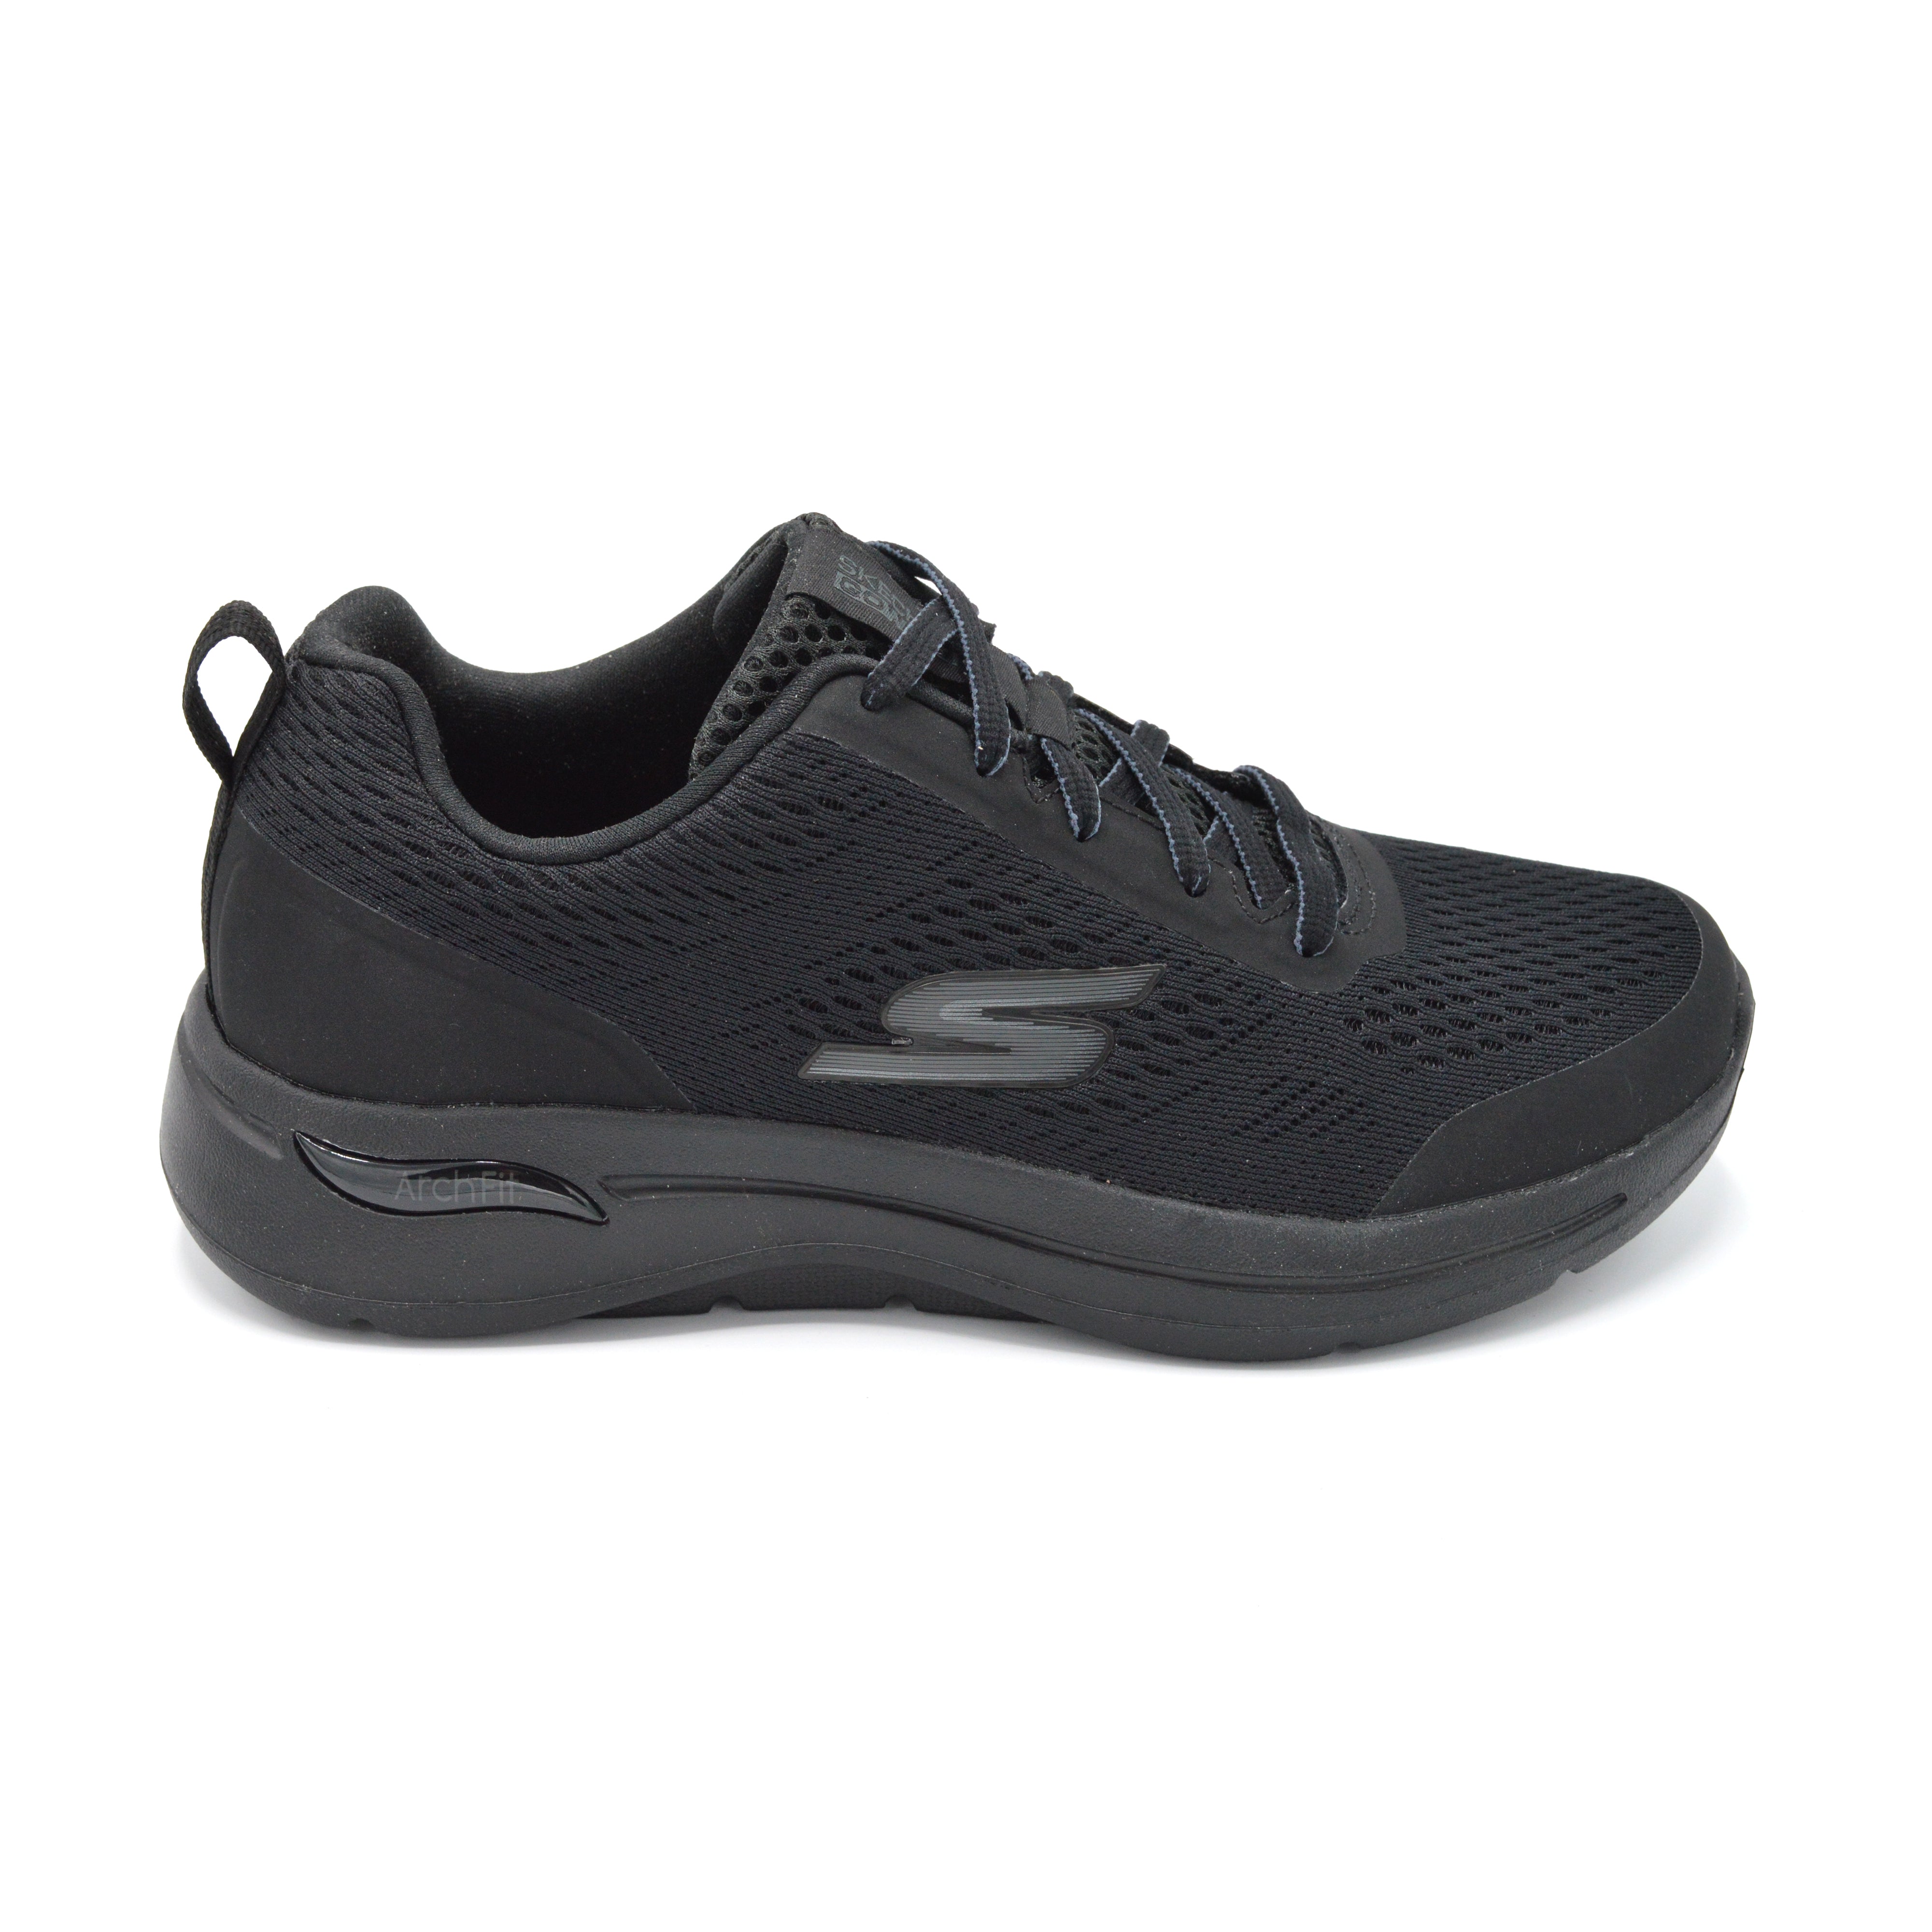 Skechers Go Walk Idyllic- Wide Fit Trainer -Black 2E Fit — Wide Shoes